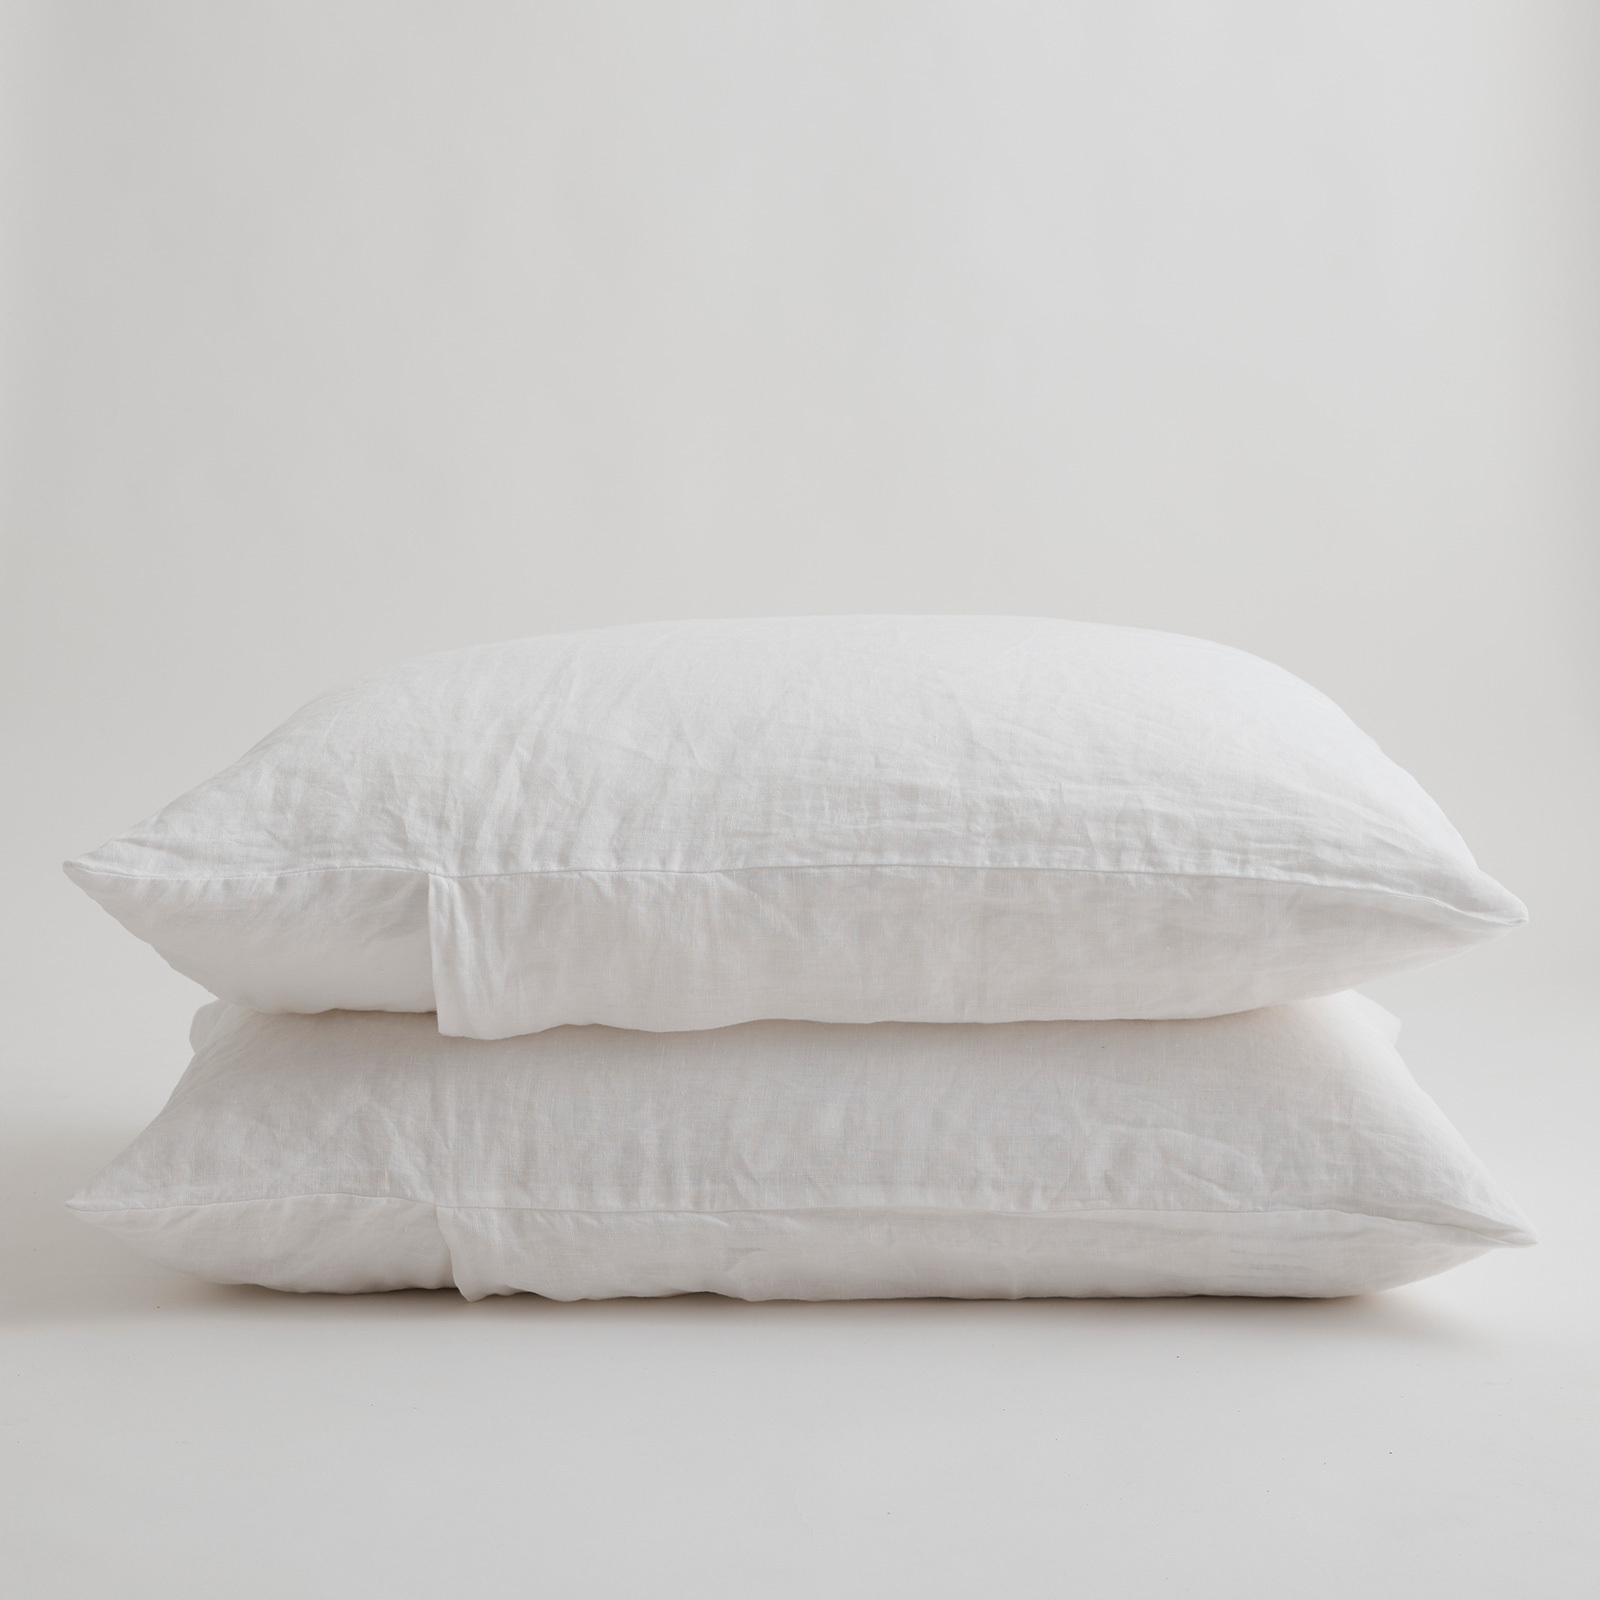 100% Pure Linen White Standard Pillowcase Set (2)